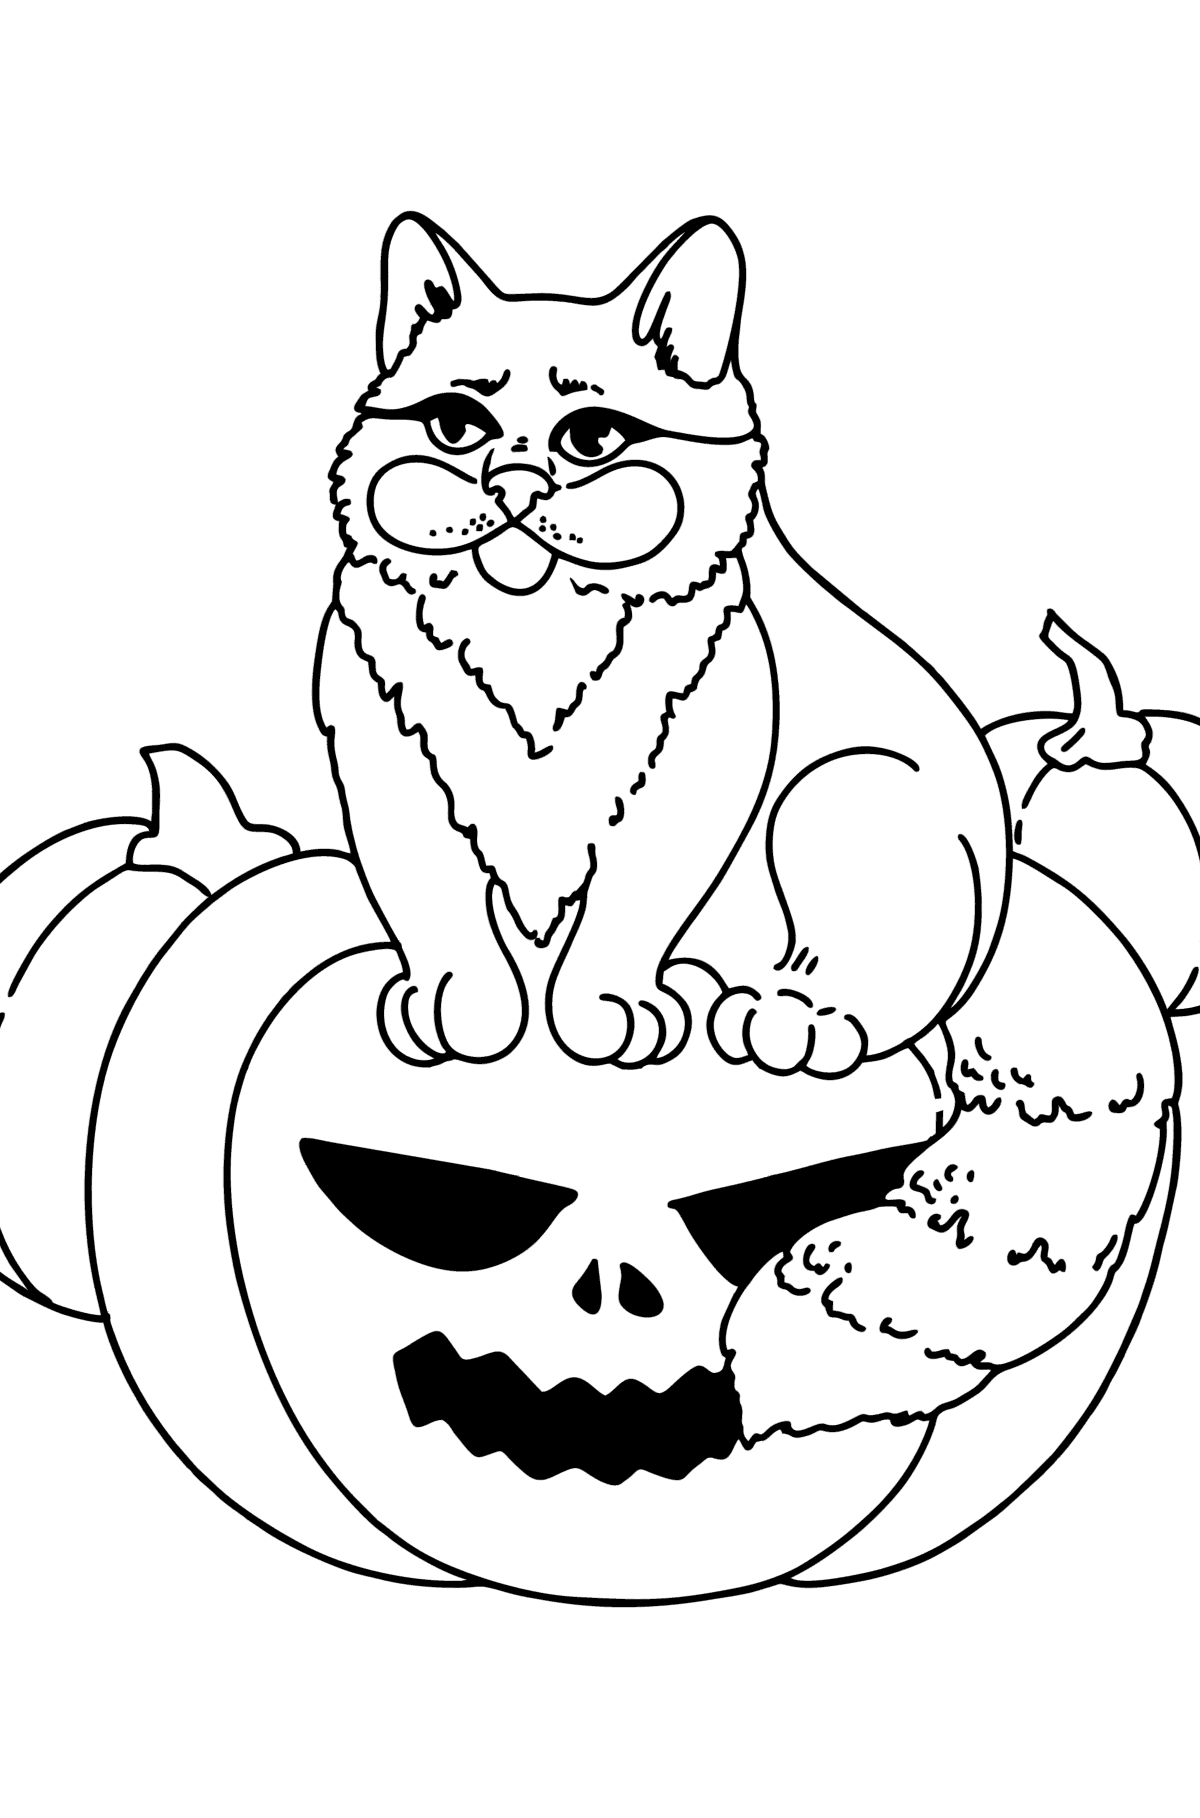 Dibujo de Gato de Halloween para colorear - Dibujos para Colorear para Niños